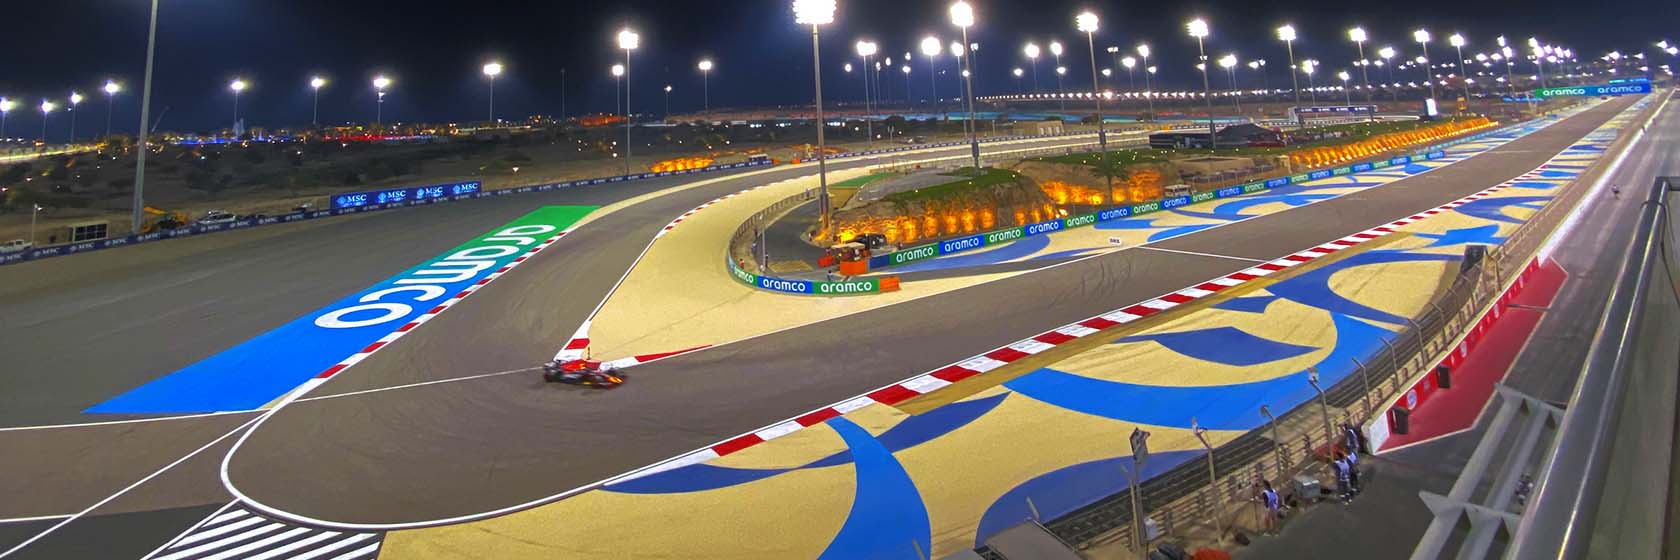 F1 I BAHRAIN - BAHRAIN INT. CIRCUIT